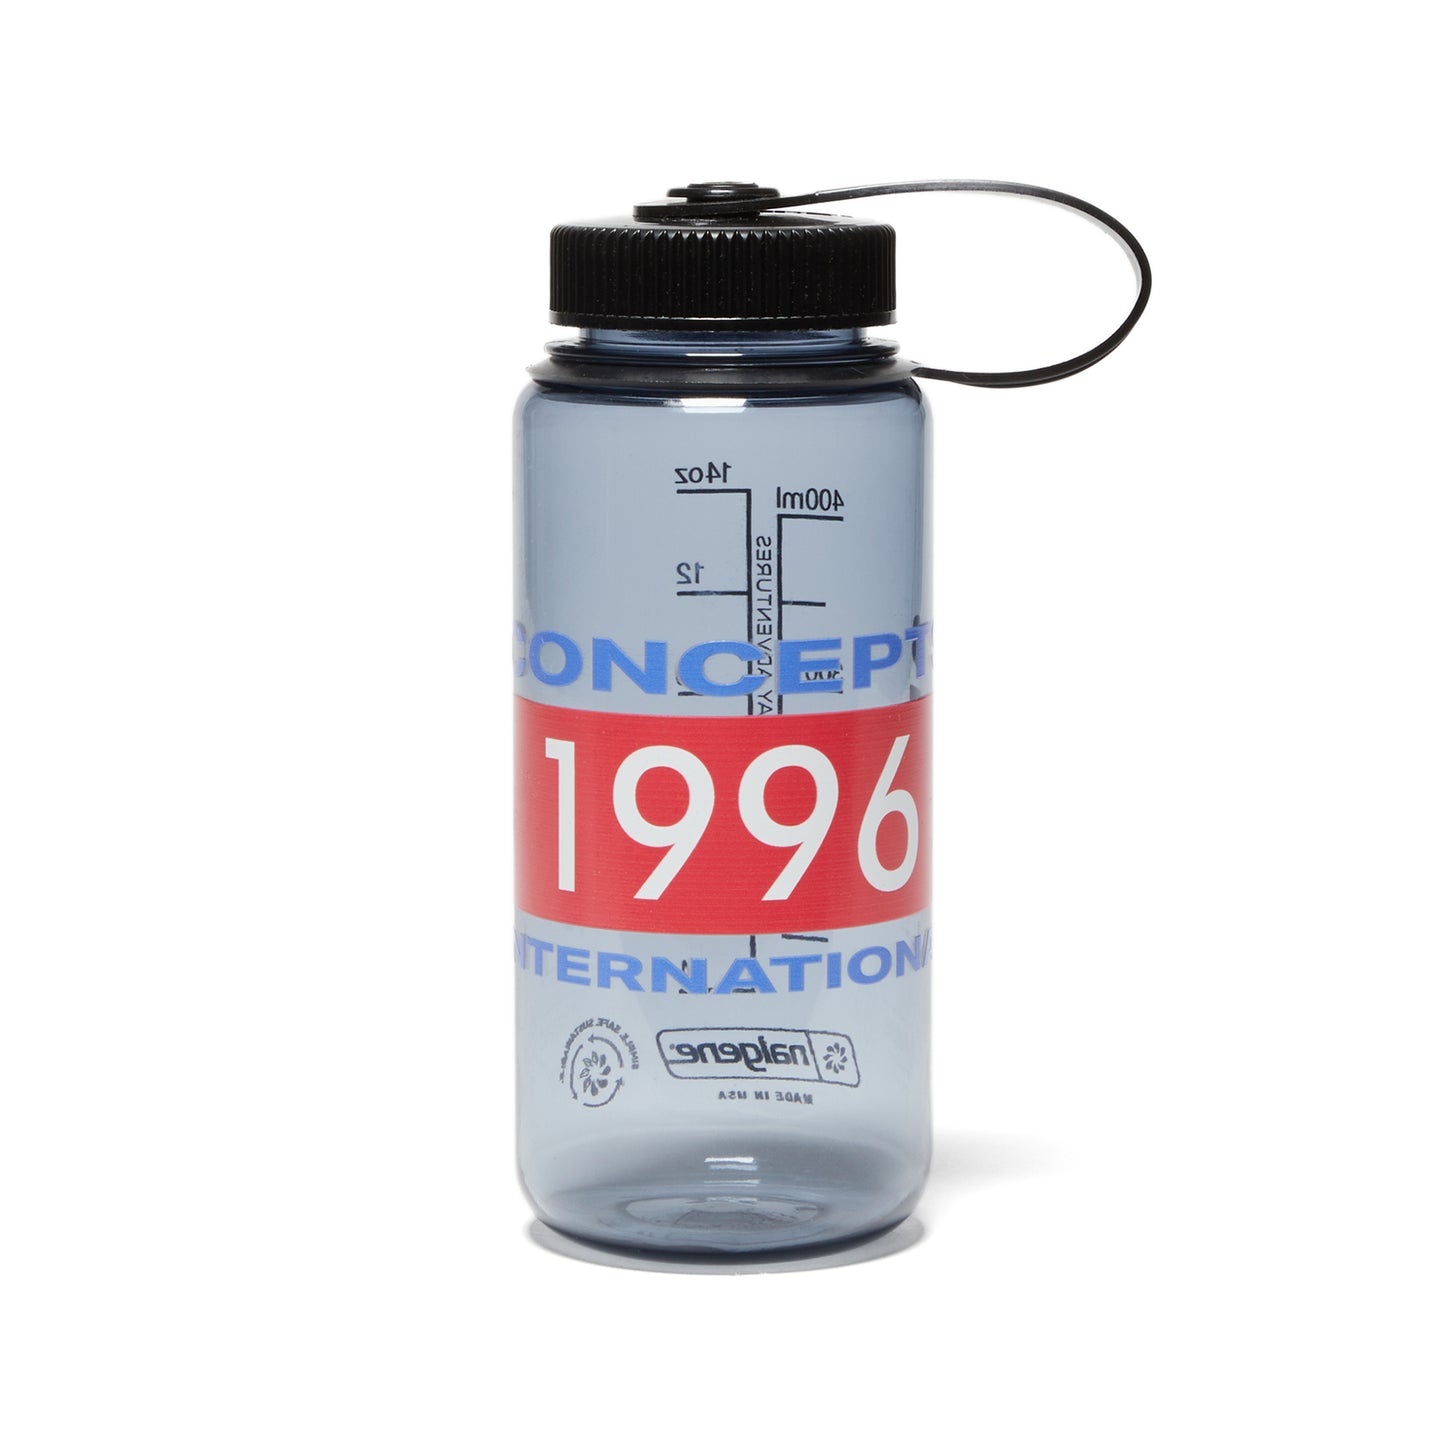 Concepts Intl 1996 Nalgene Bottle (Clear/Black)